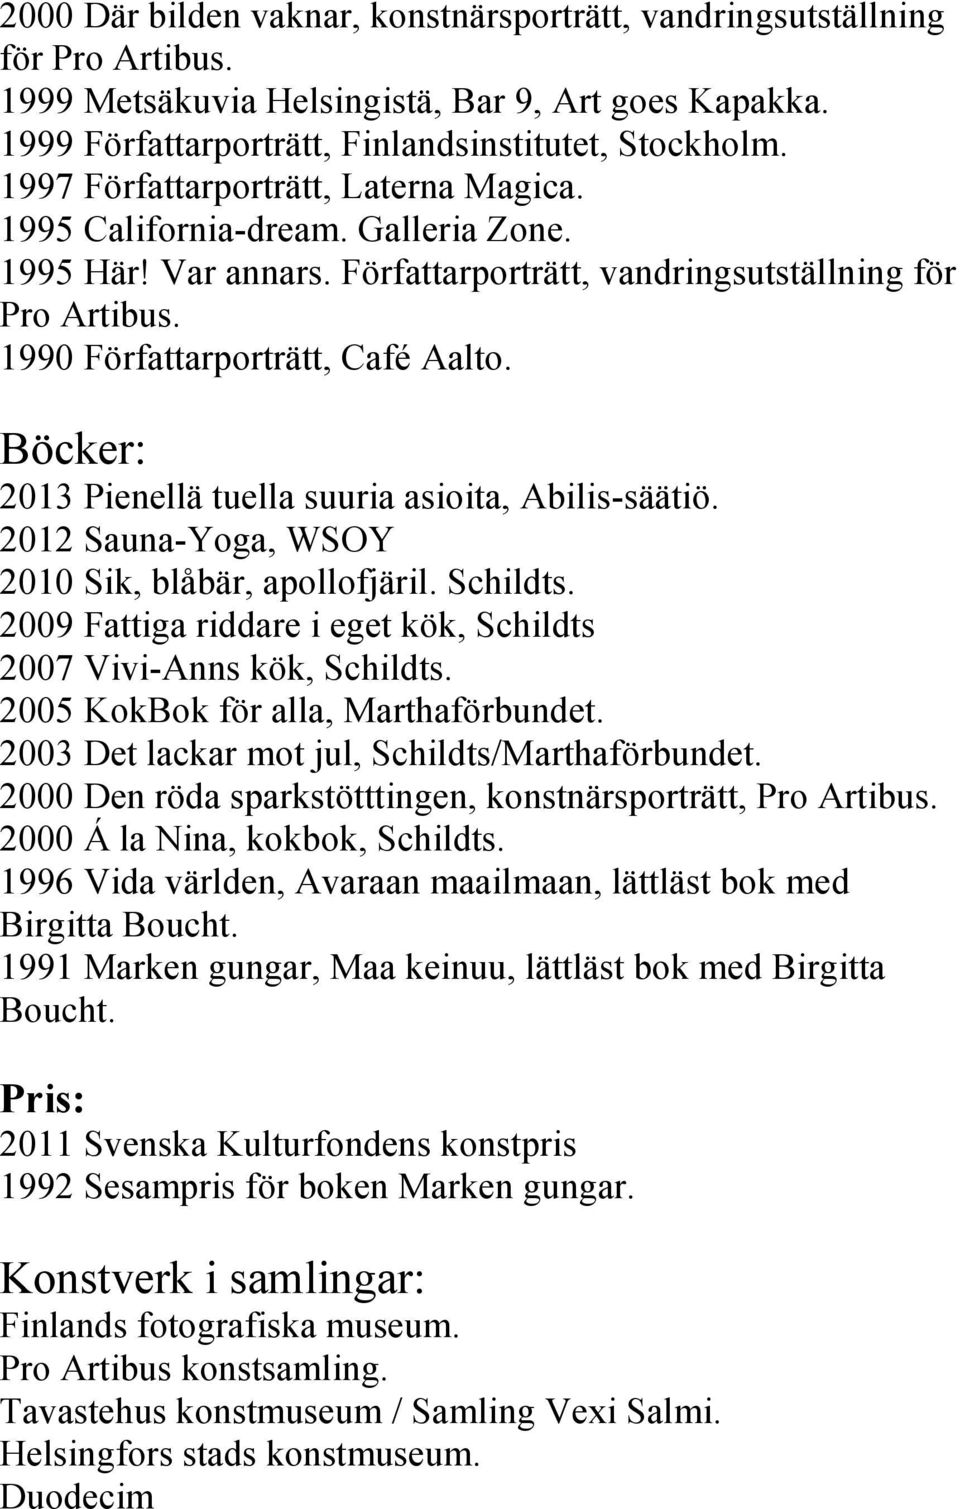 Böcker: 2013 Pienellä tuella suuria asioita, Abilis-säätiö. 2012 Sauna-Yoga, WSOY 2010 Sik, blåbär, apollofjäril. Schildts. 2009 Fattiga riddare i eget kök, Schildts 2007 Vivi-Anns kök, Schildts.